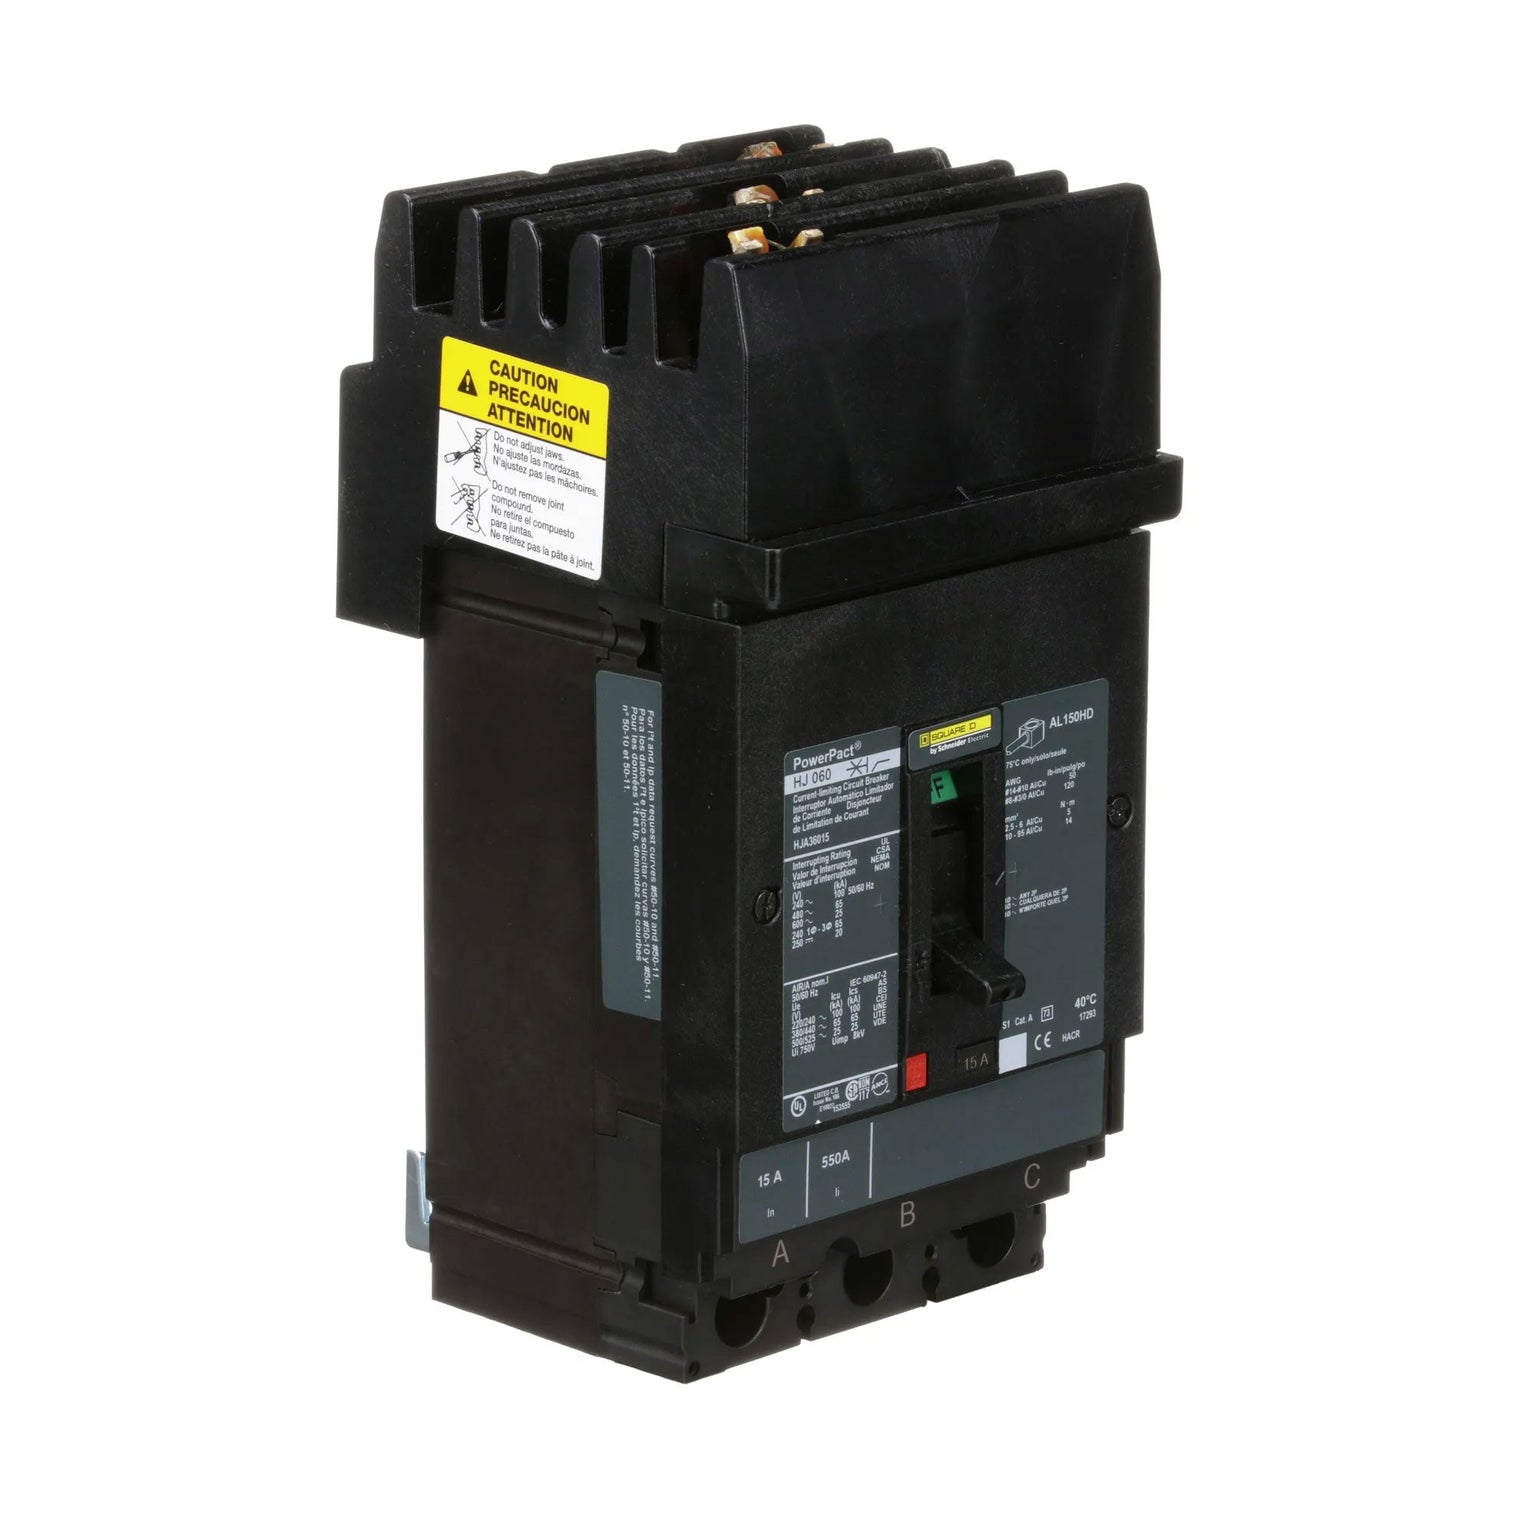 HJA36015 - Square D - Molded Case Circuit Breaker